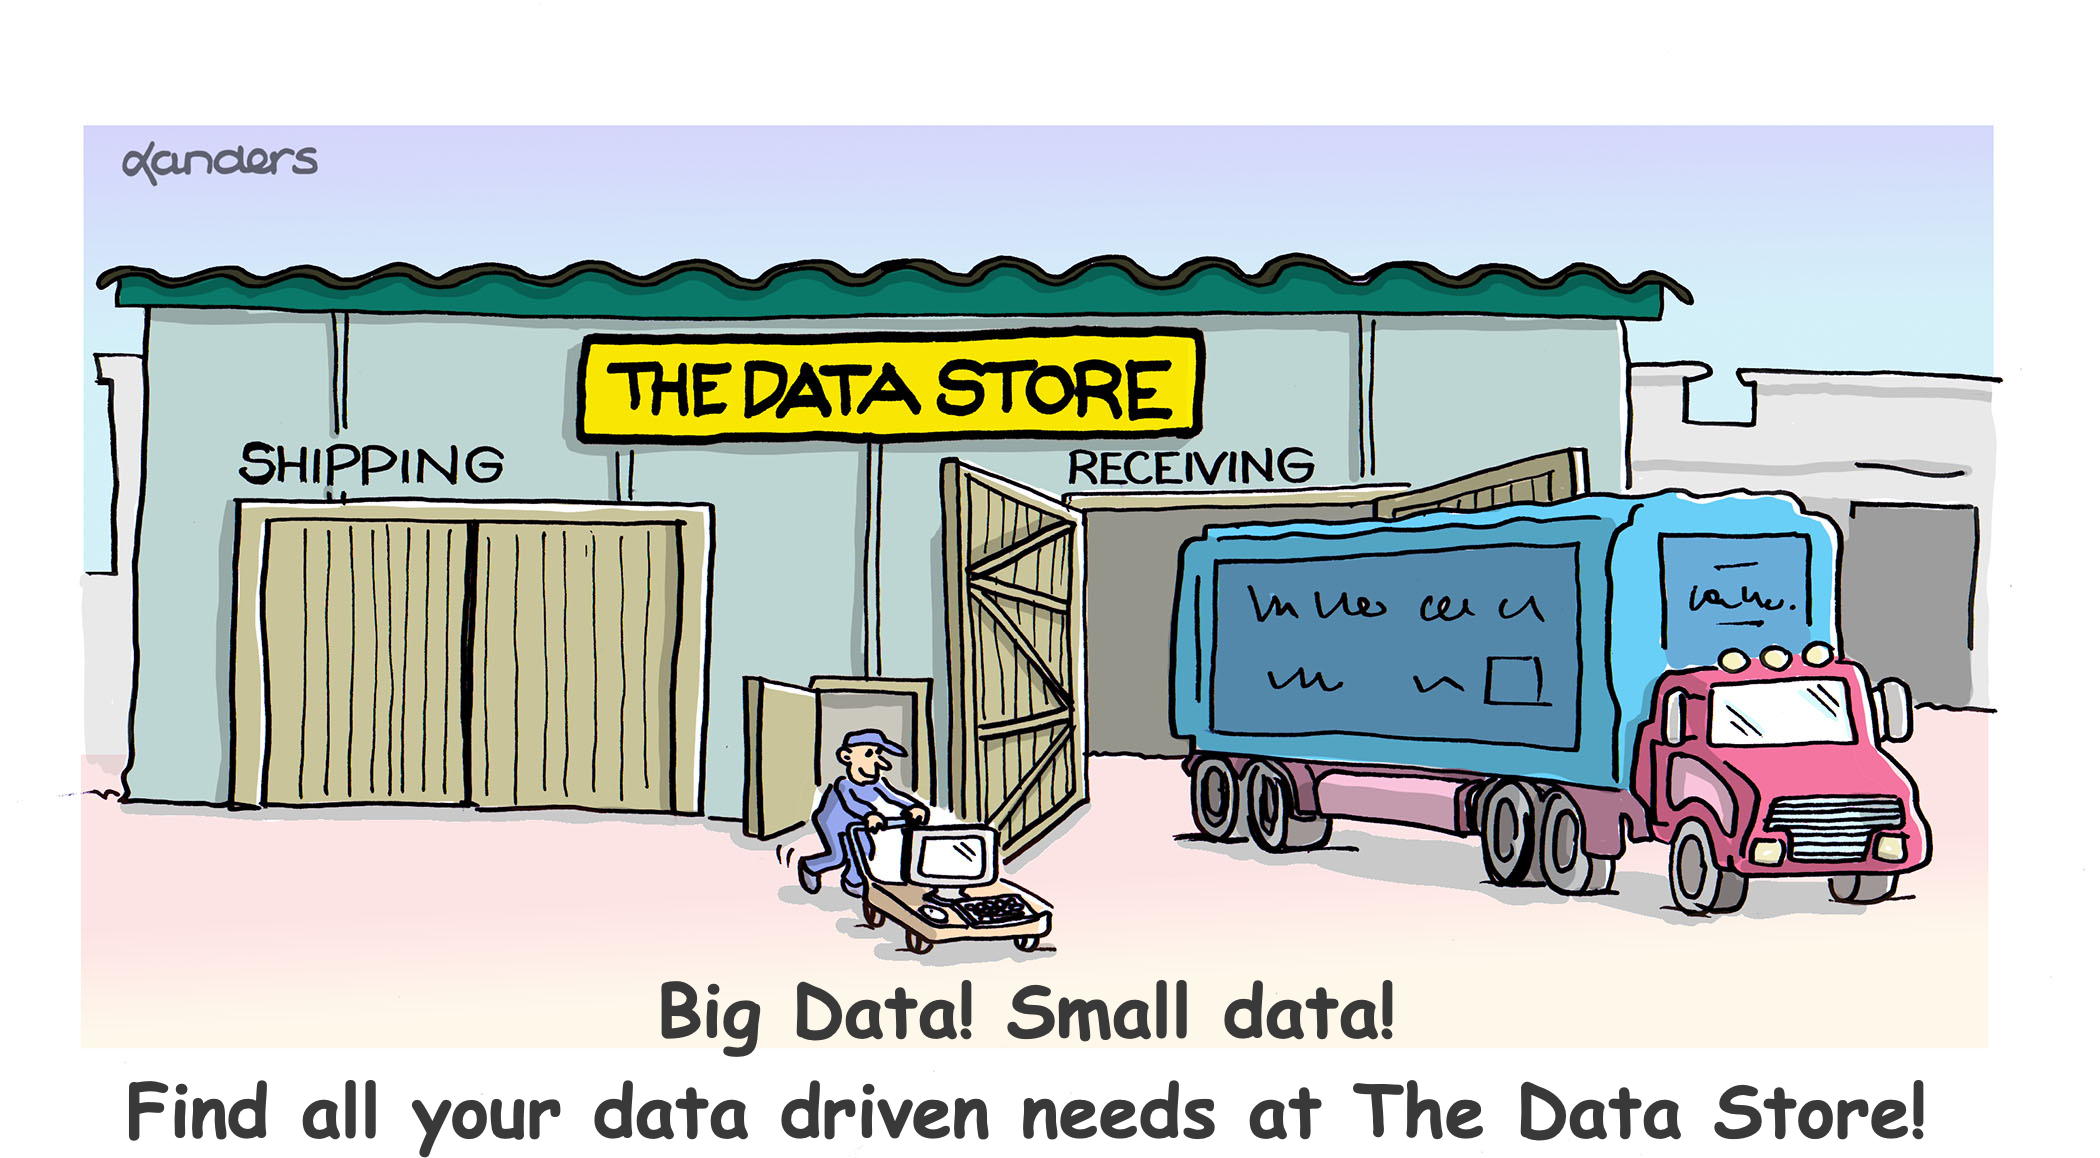 Cartoon showing loading dock behind "Data Store"